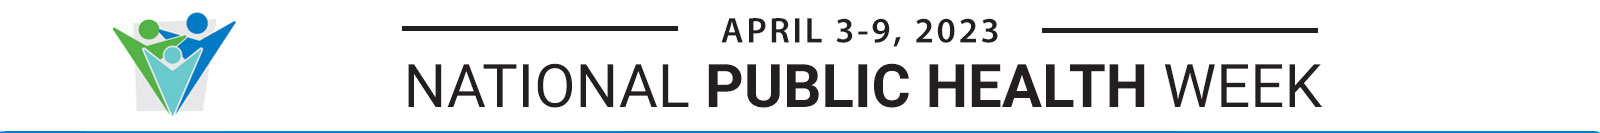 National Public Health Week April 3-9, 2023